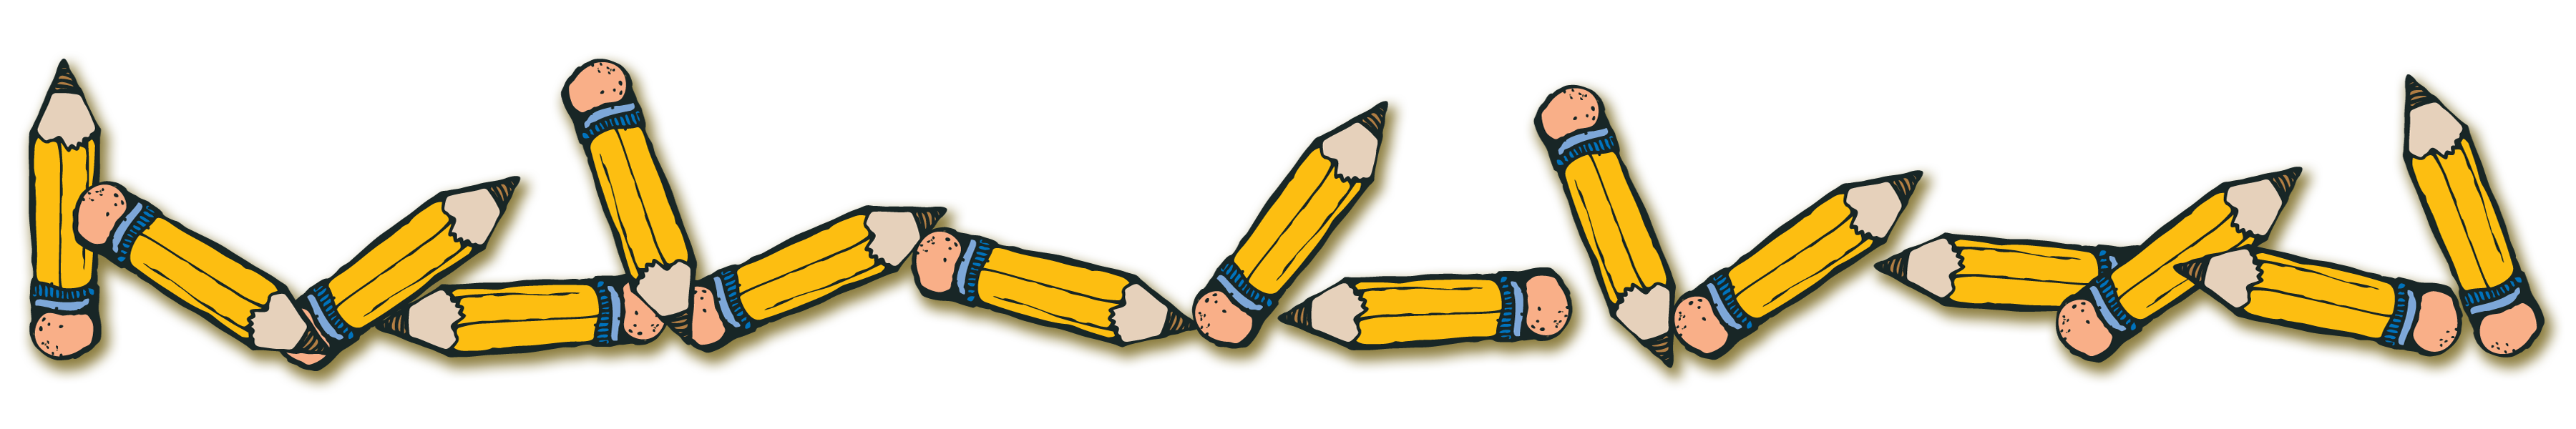 Free SCHOOL BORDER, Download Free Clip Art, Free Clip Art on.